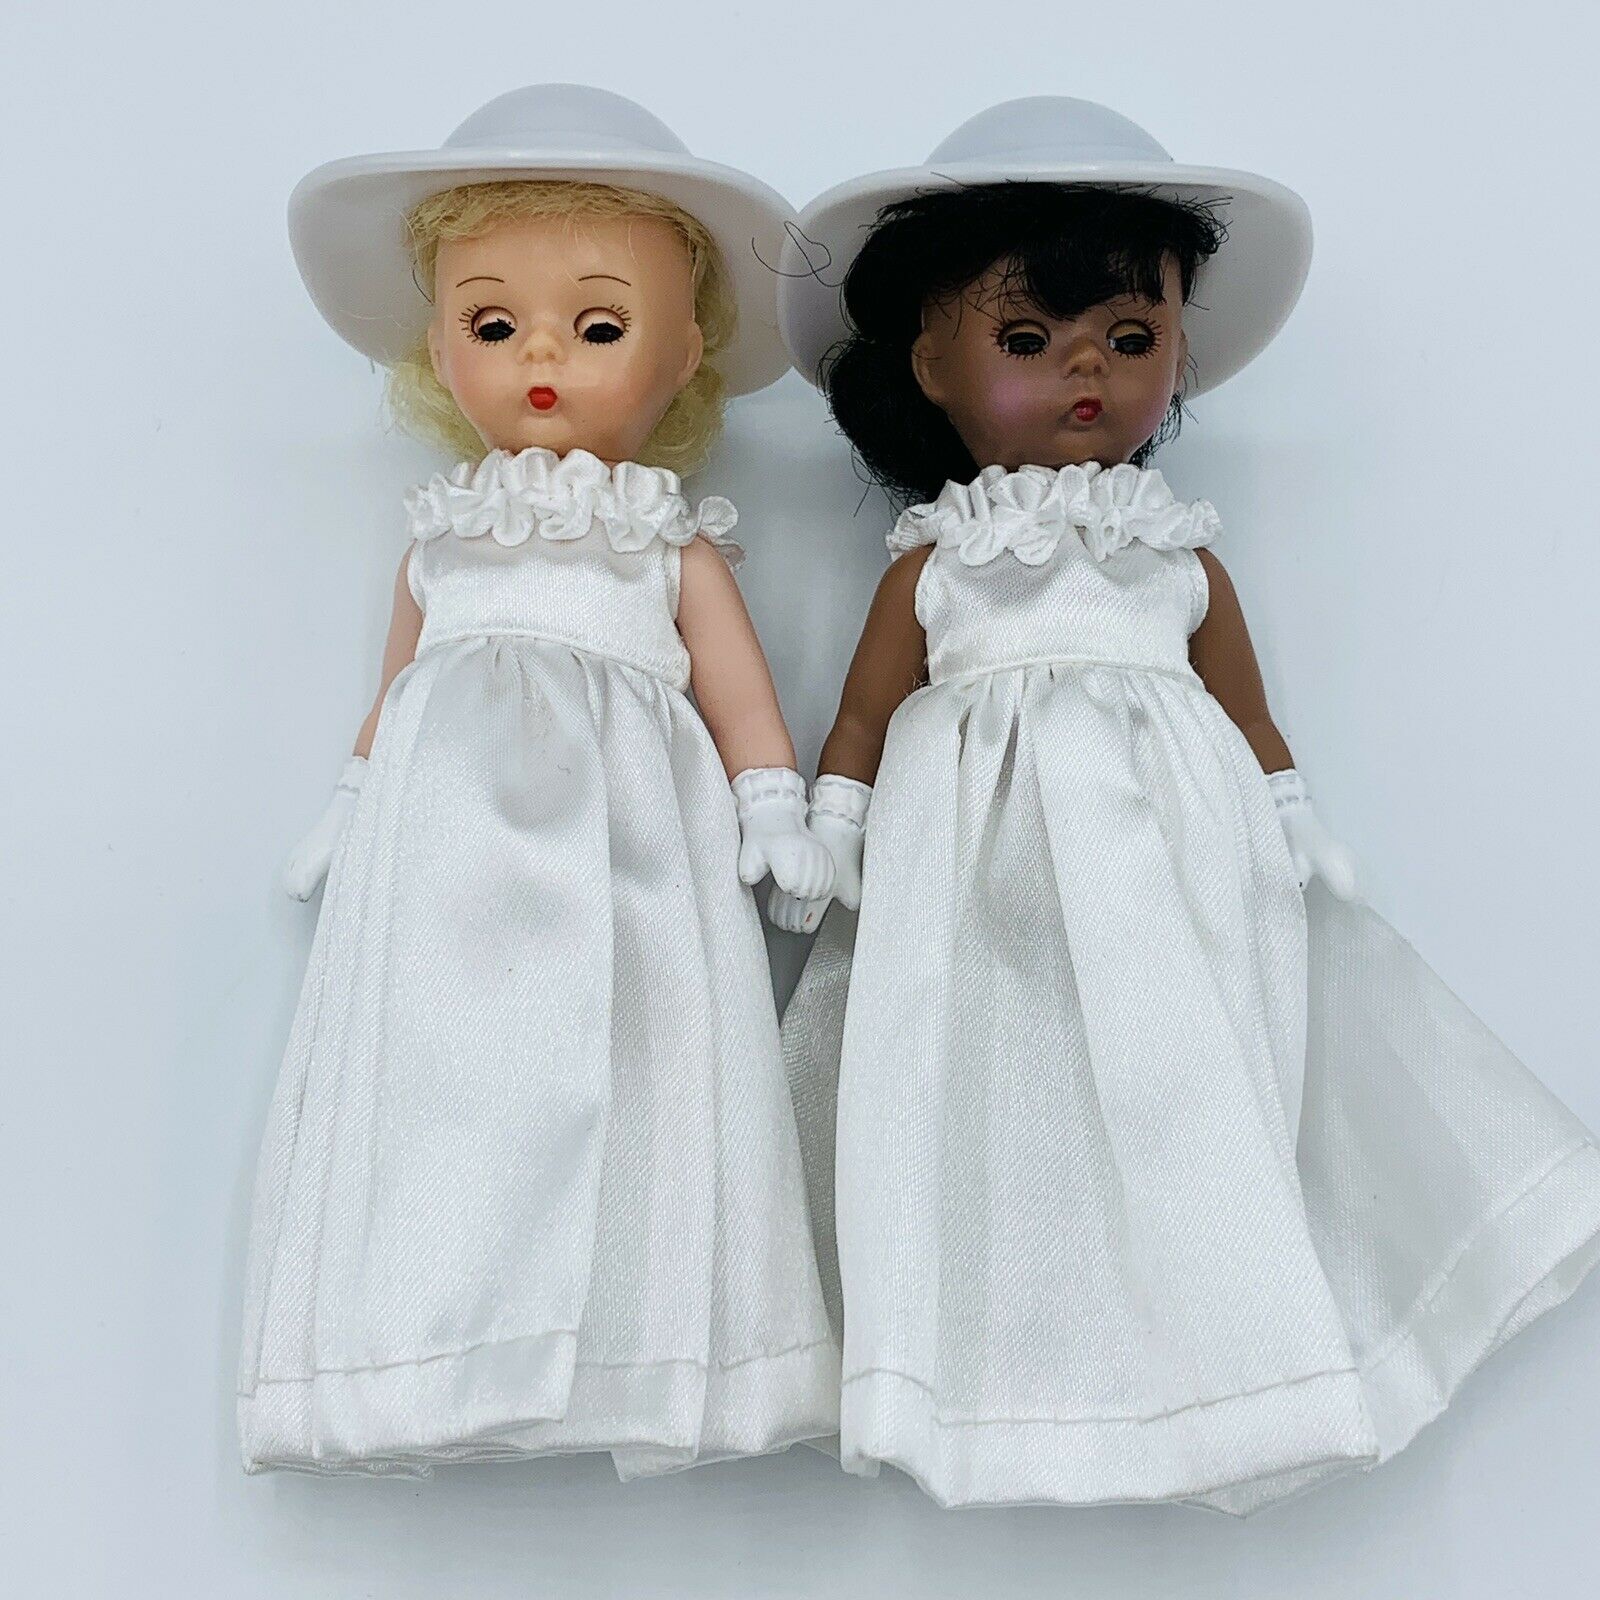 Madame Alexander Doll 5" Mcdonalds Memories Of A Lifetime Bride Lot Of 2 Girls